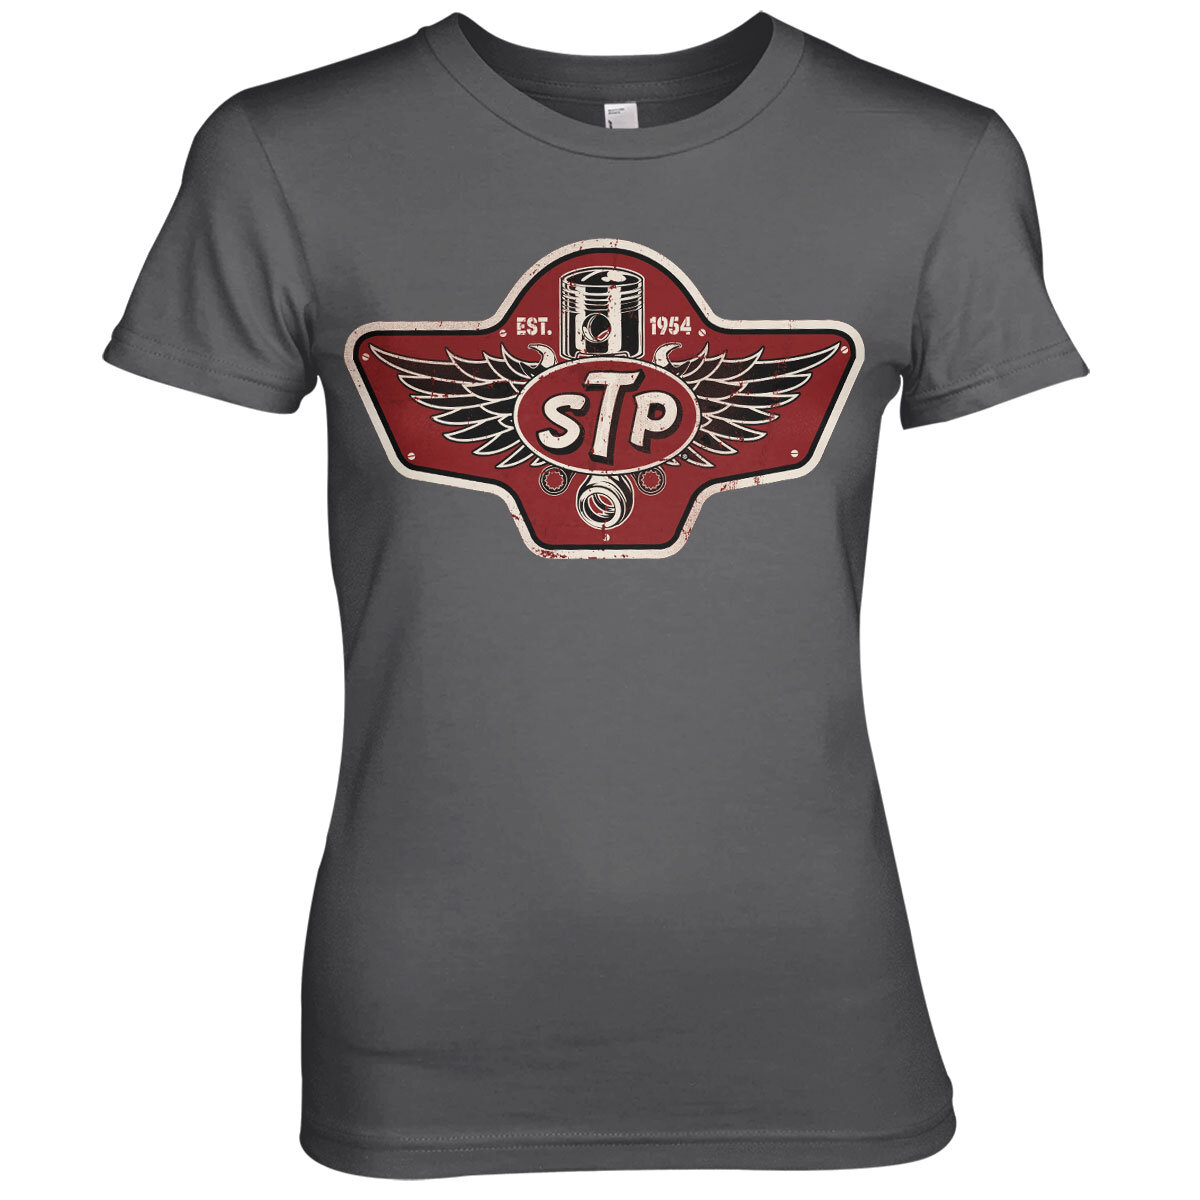 STP Piston Emblem Girly Tee